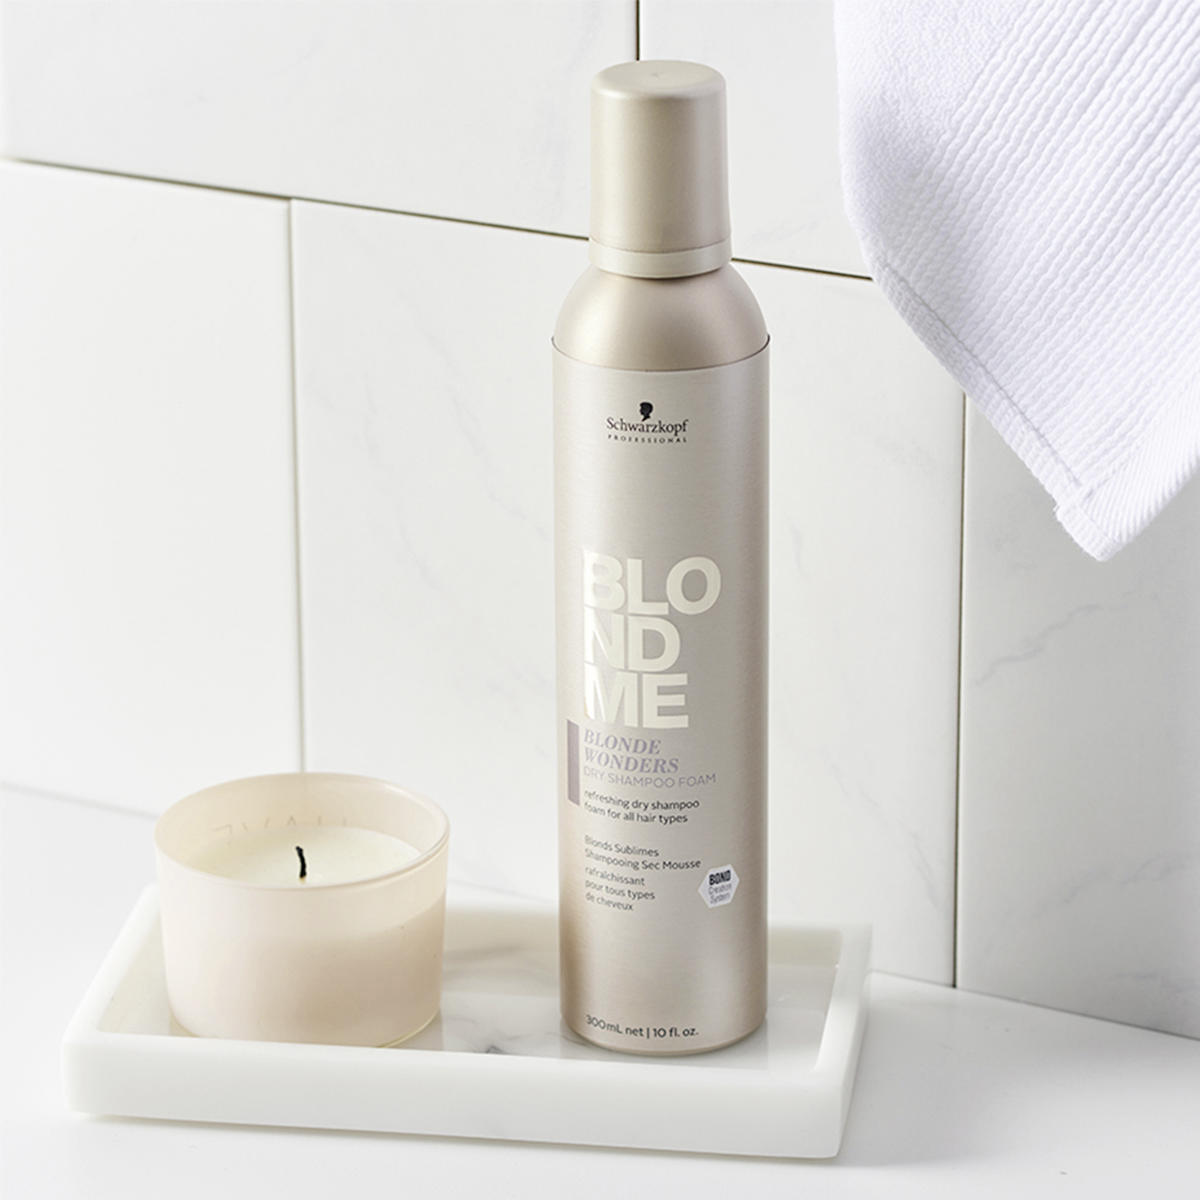 Schwarzkopf Professional BlondMe Blonde Wonders Dry Shampoo Foam 300 ml - 3